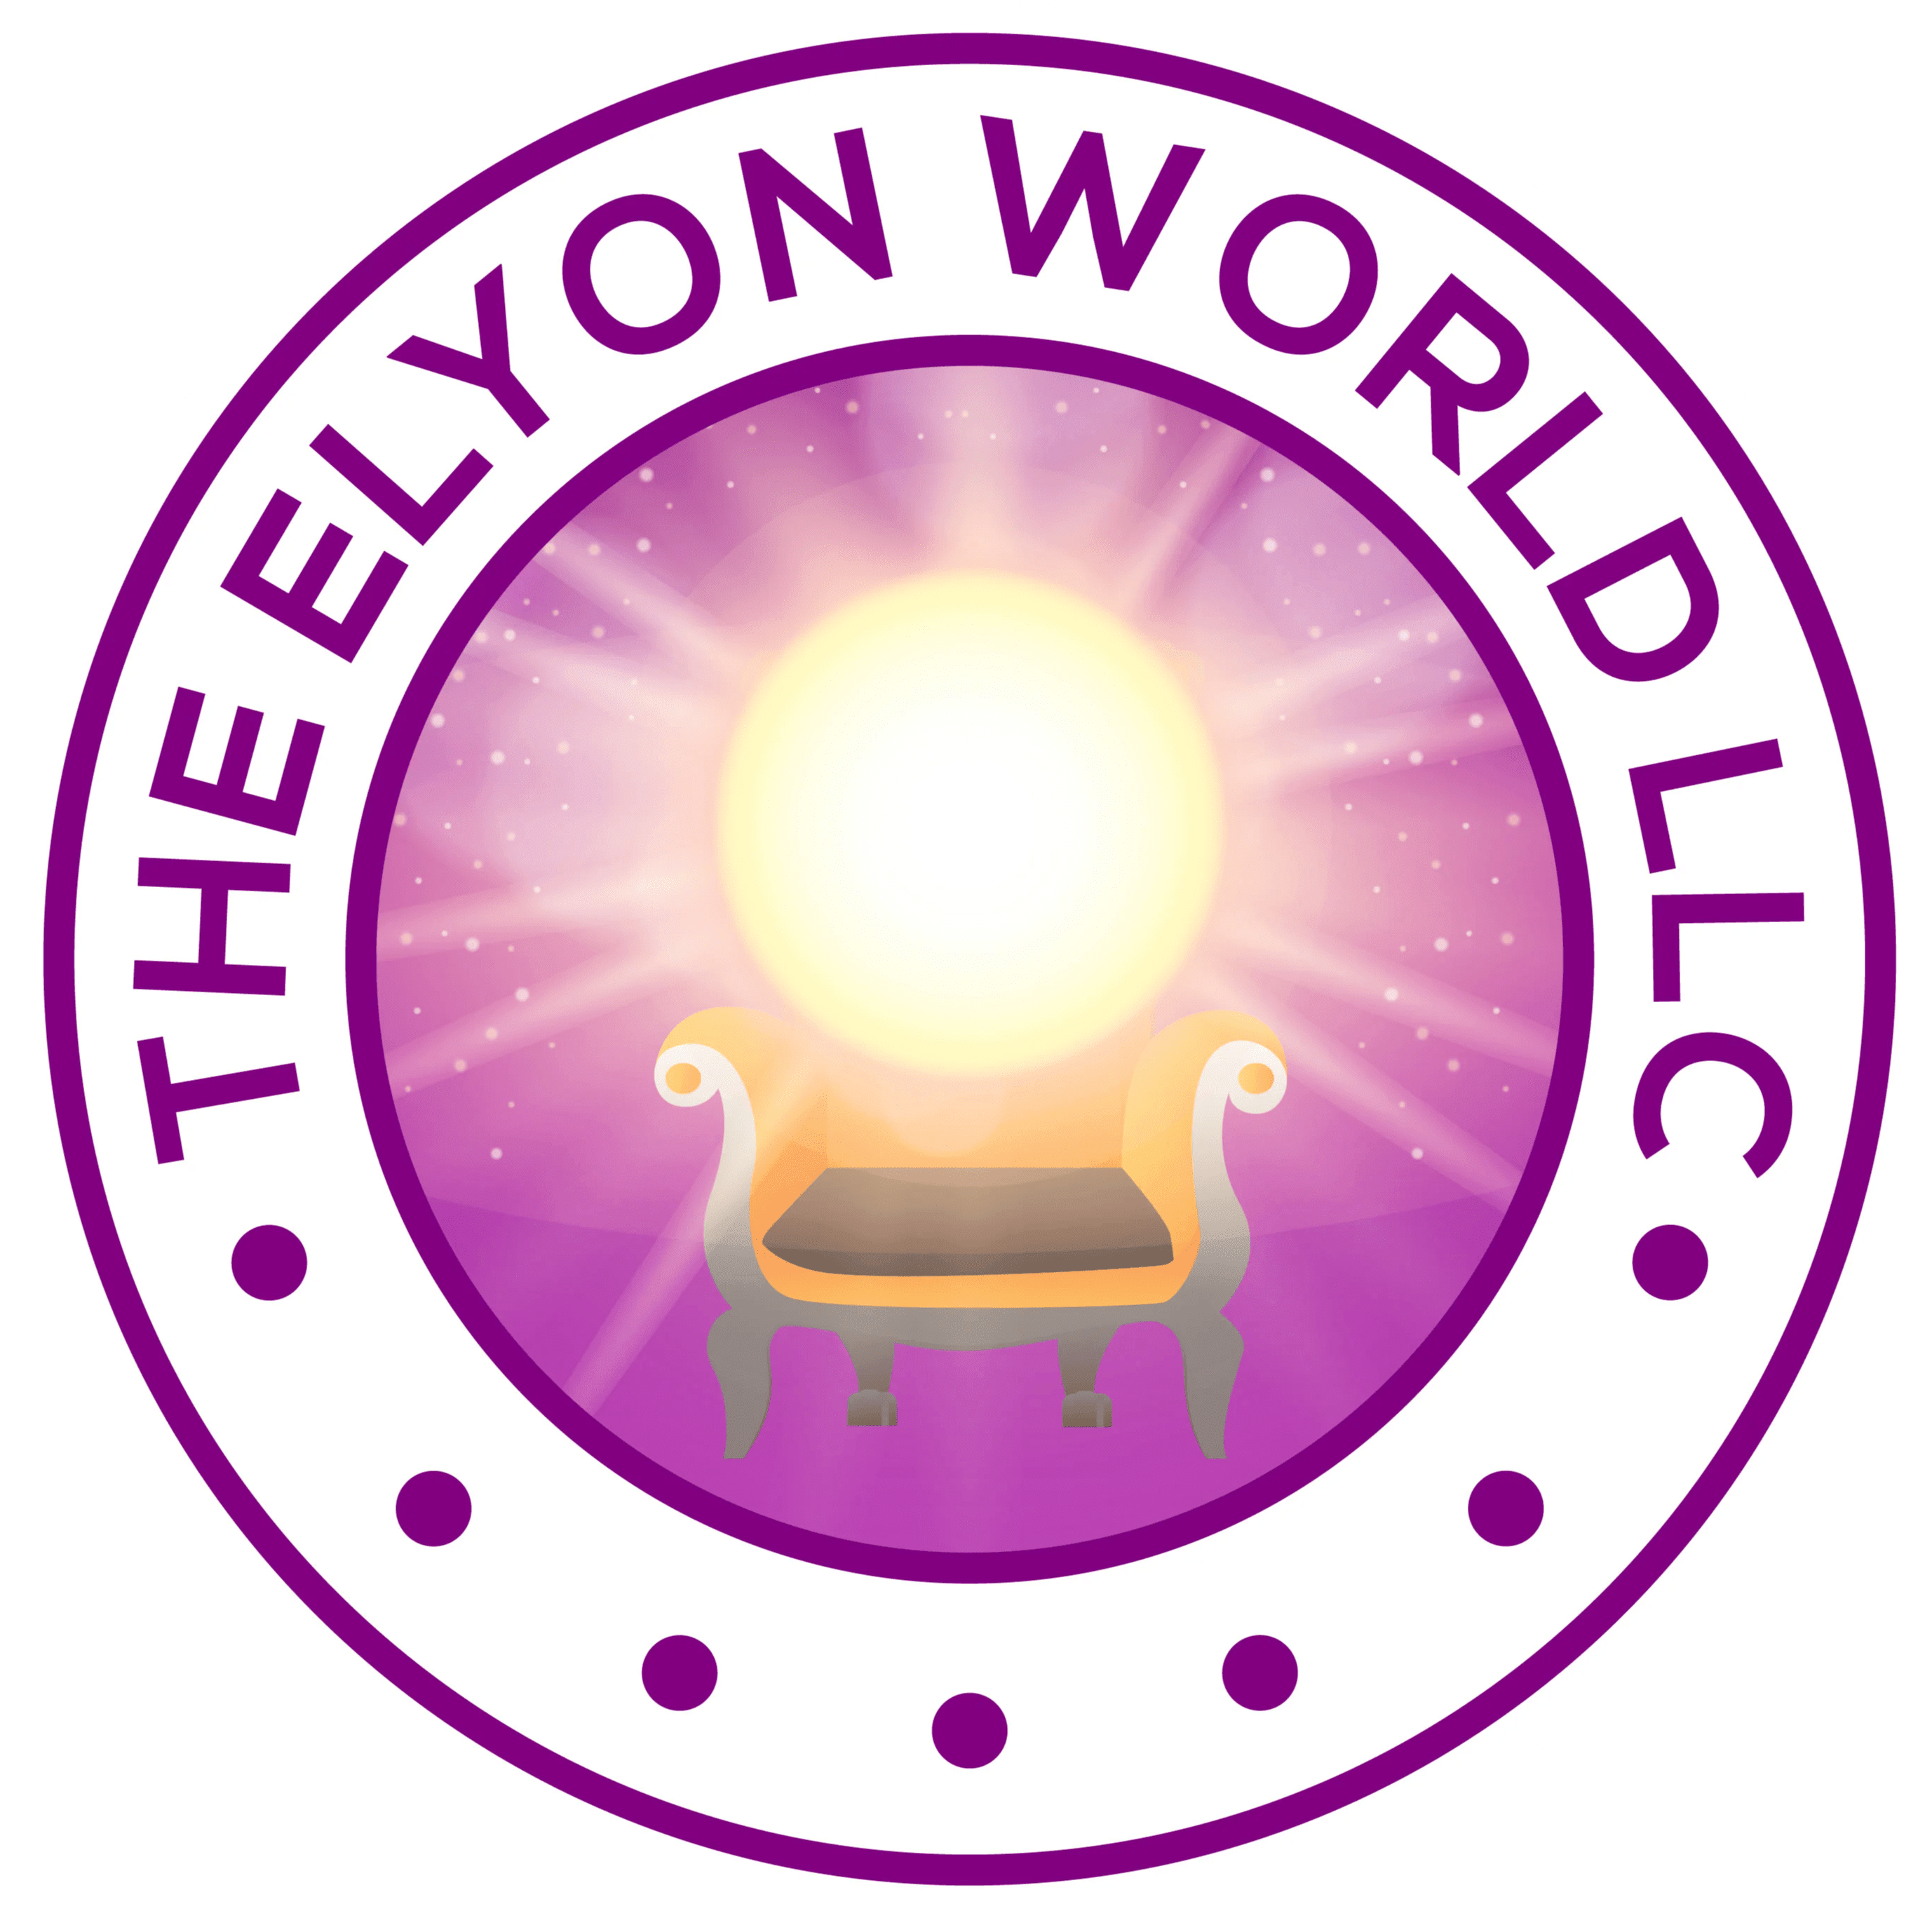 The Elyon World LLC